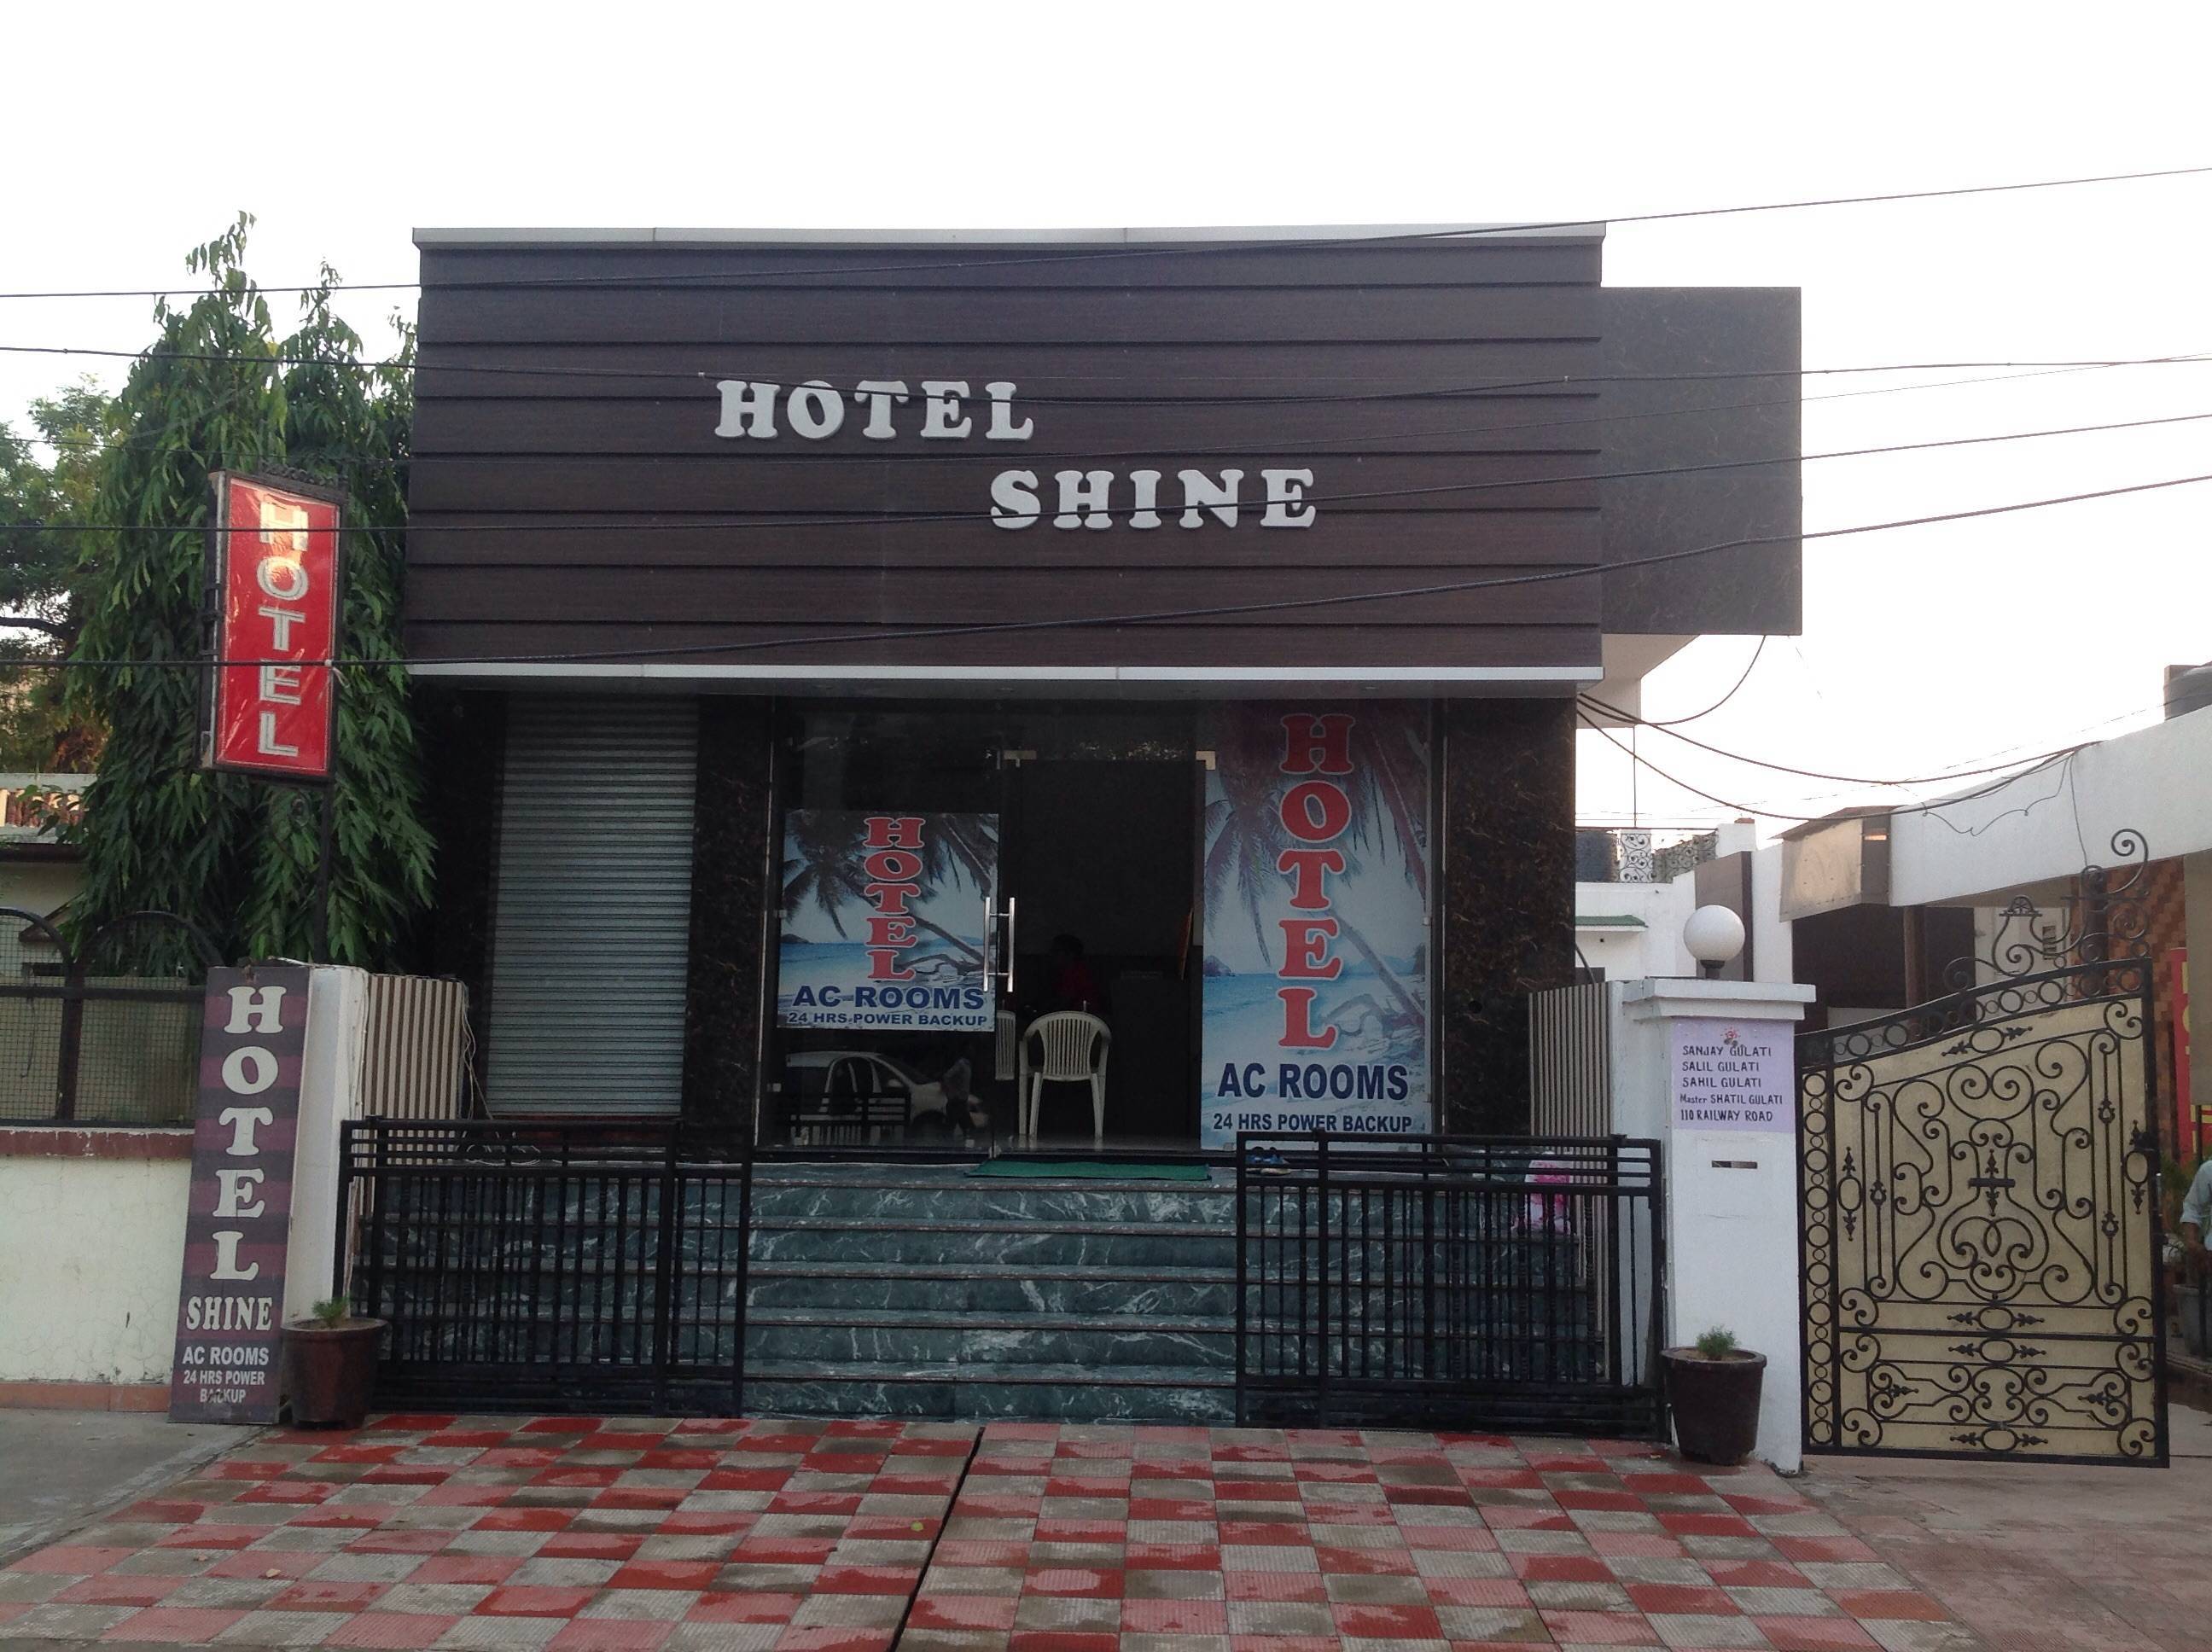 Hotel Shine|Hotel|Accomodation